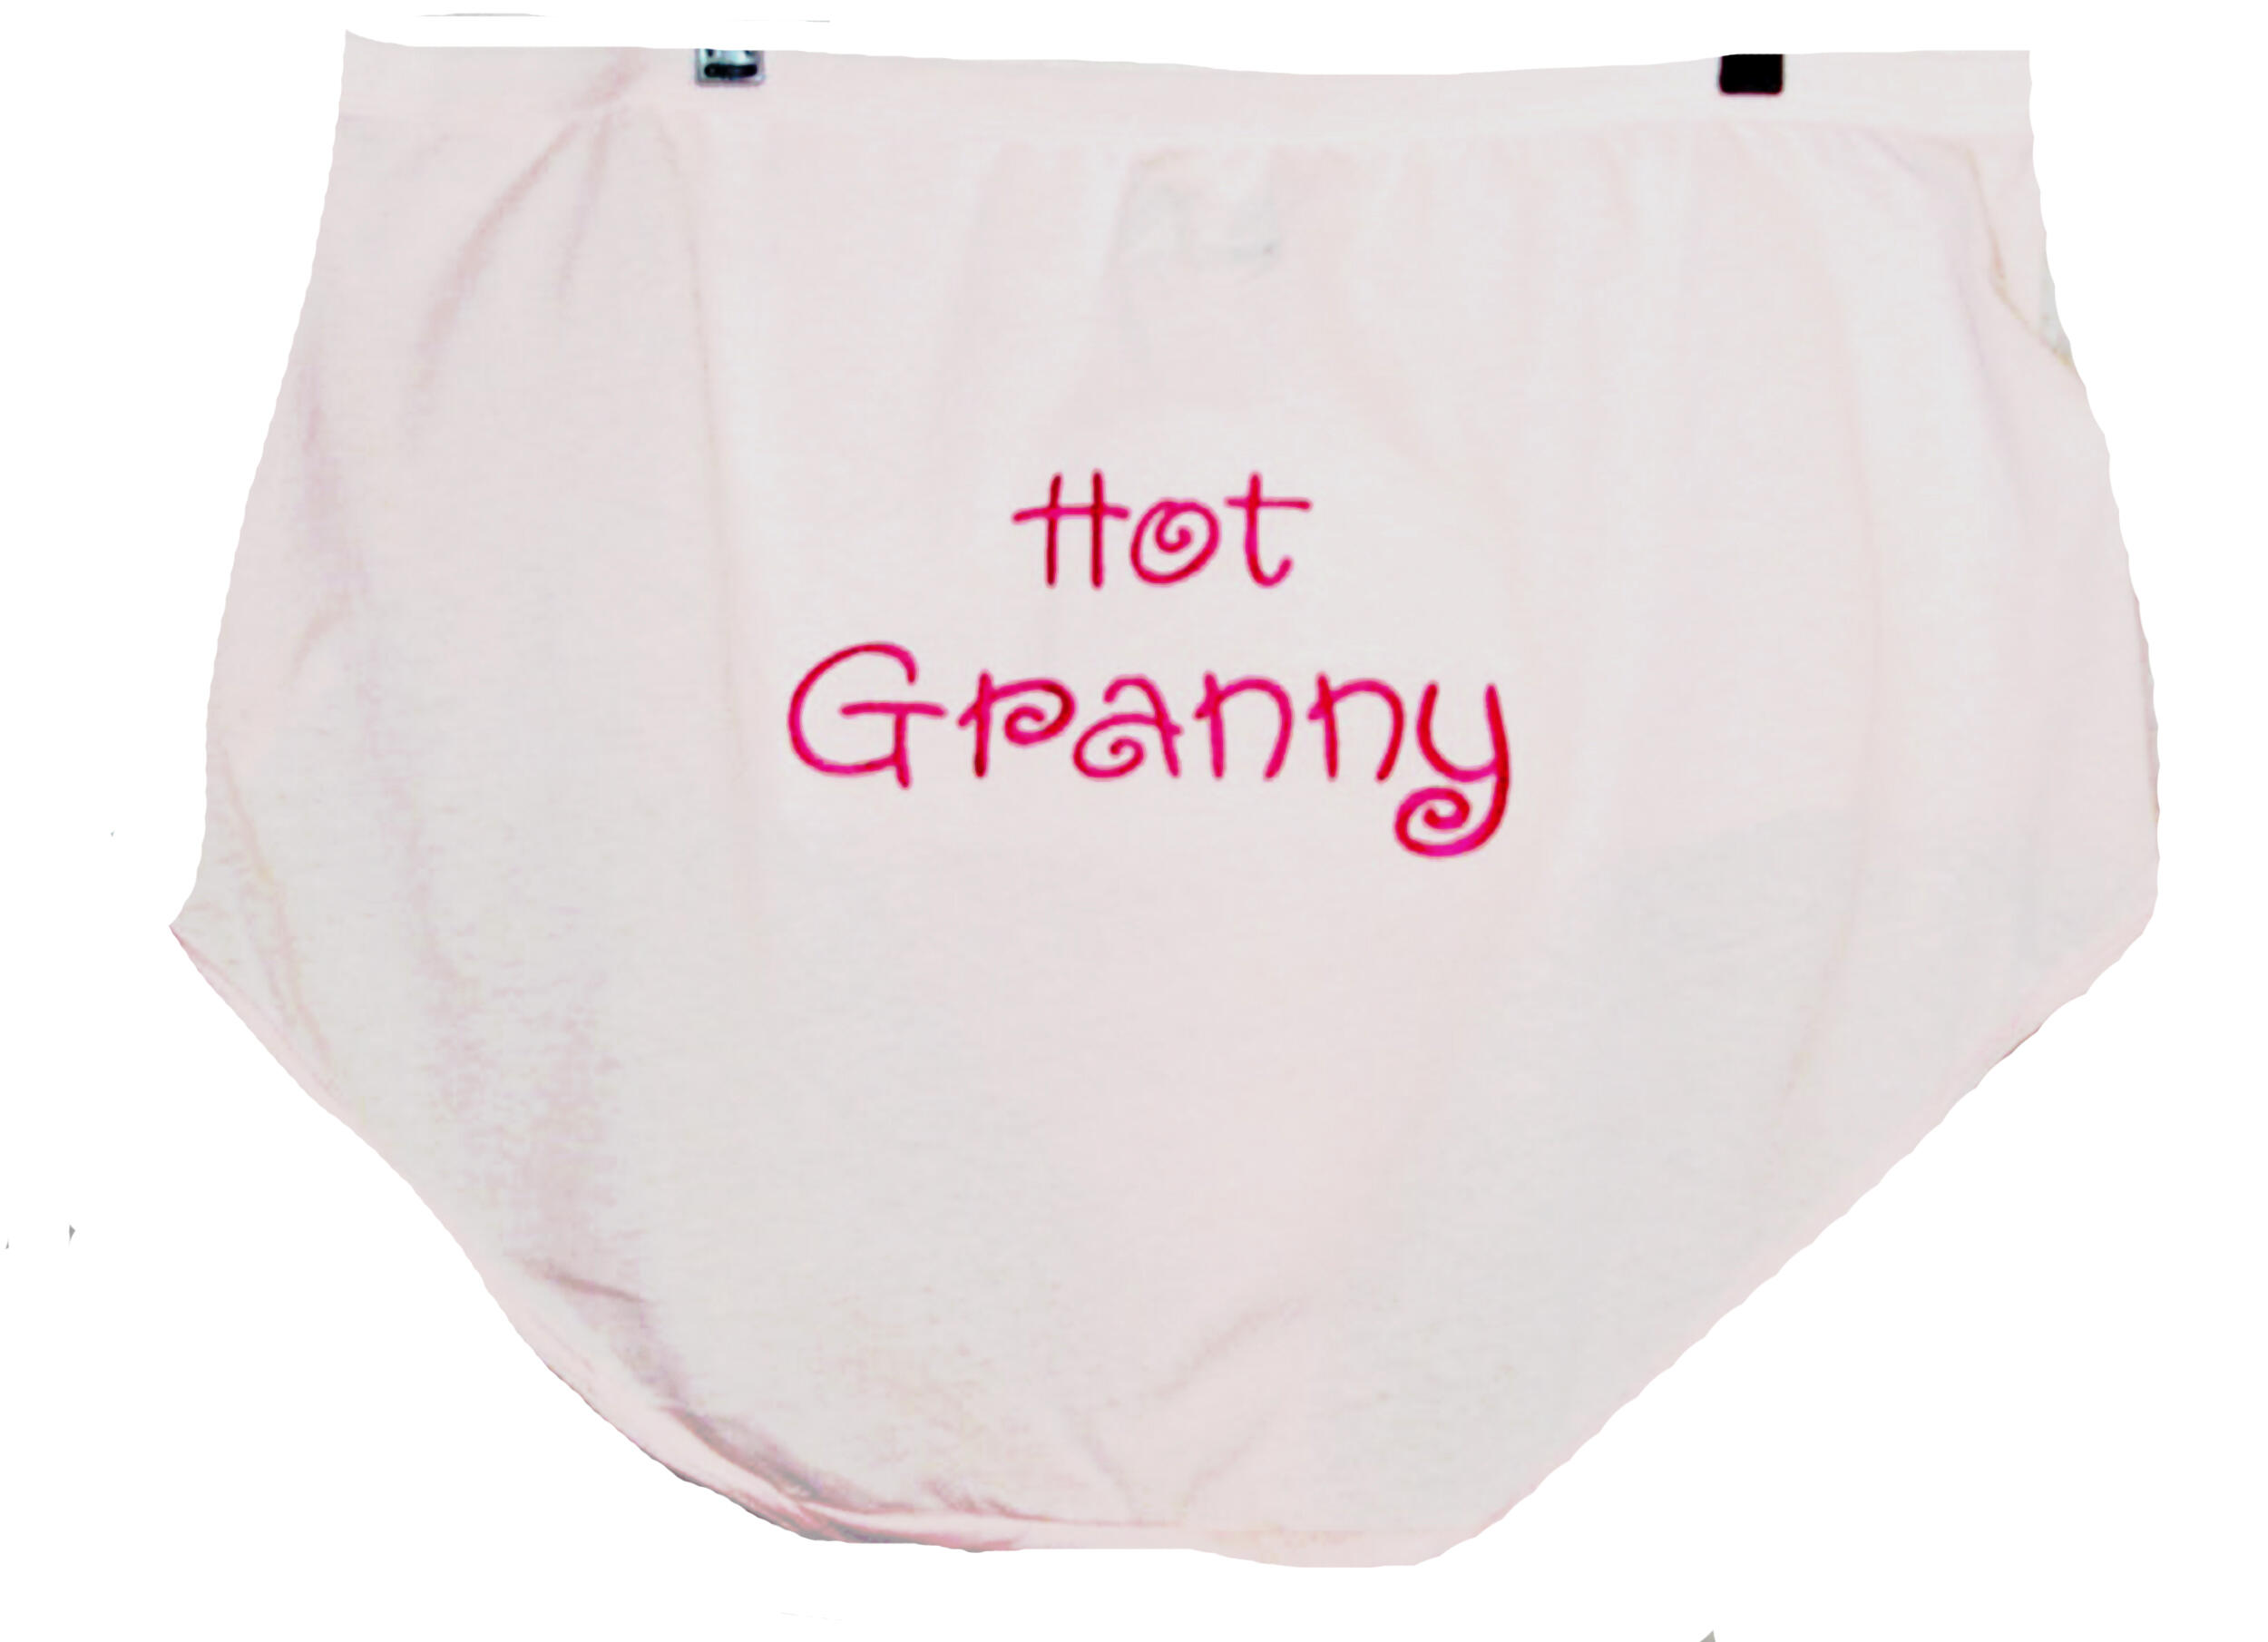 Big Undies Funny Joke Gag Prank Gifts Giant Oversized Novelty Underwear  Panties